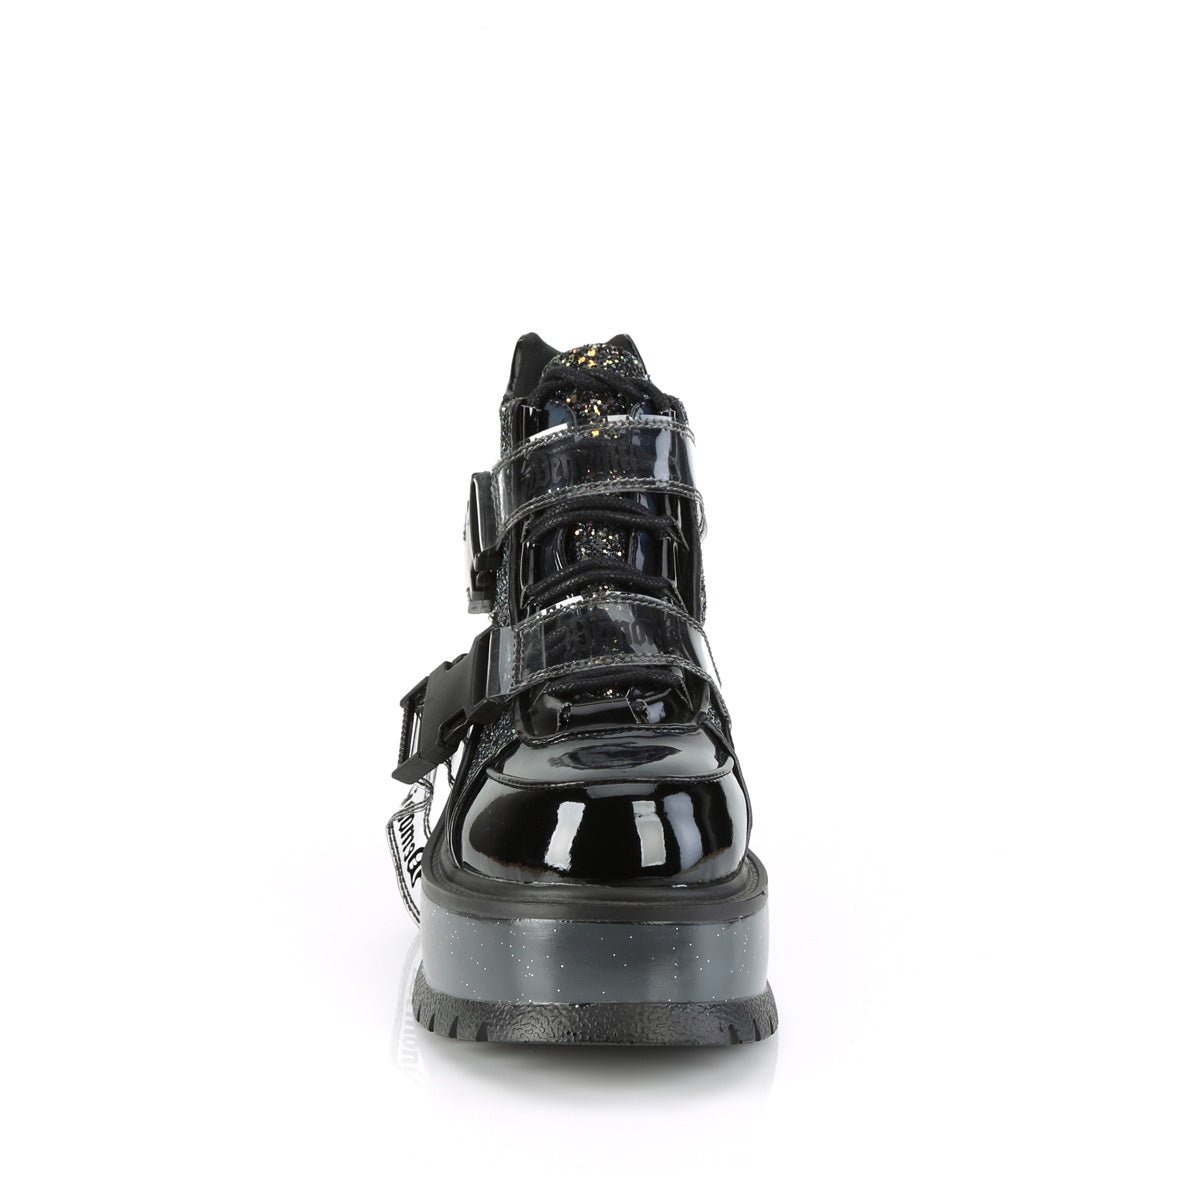 Too Fast | Demonia Slacker 50 | Black Patent Leather & Glitter Women's Ankle Boots